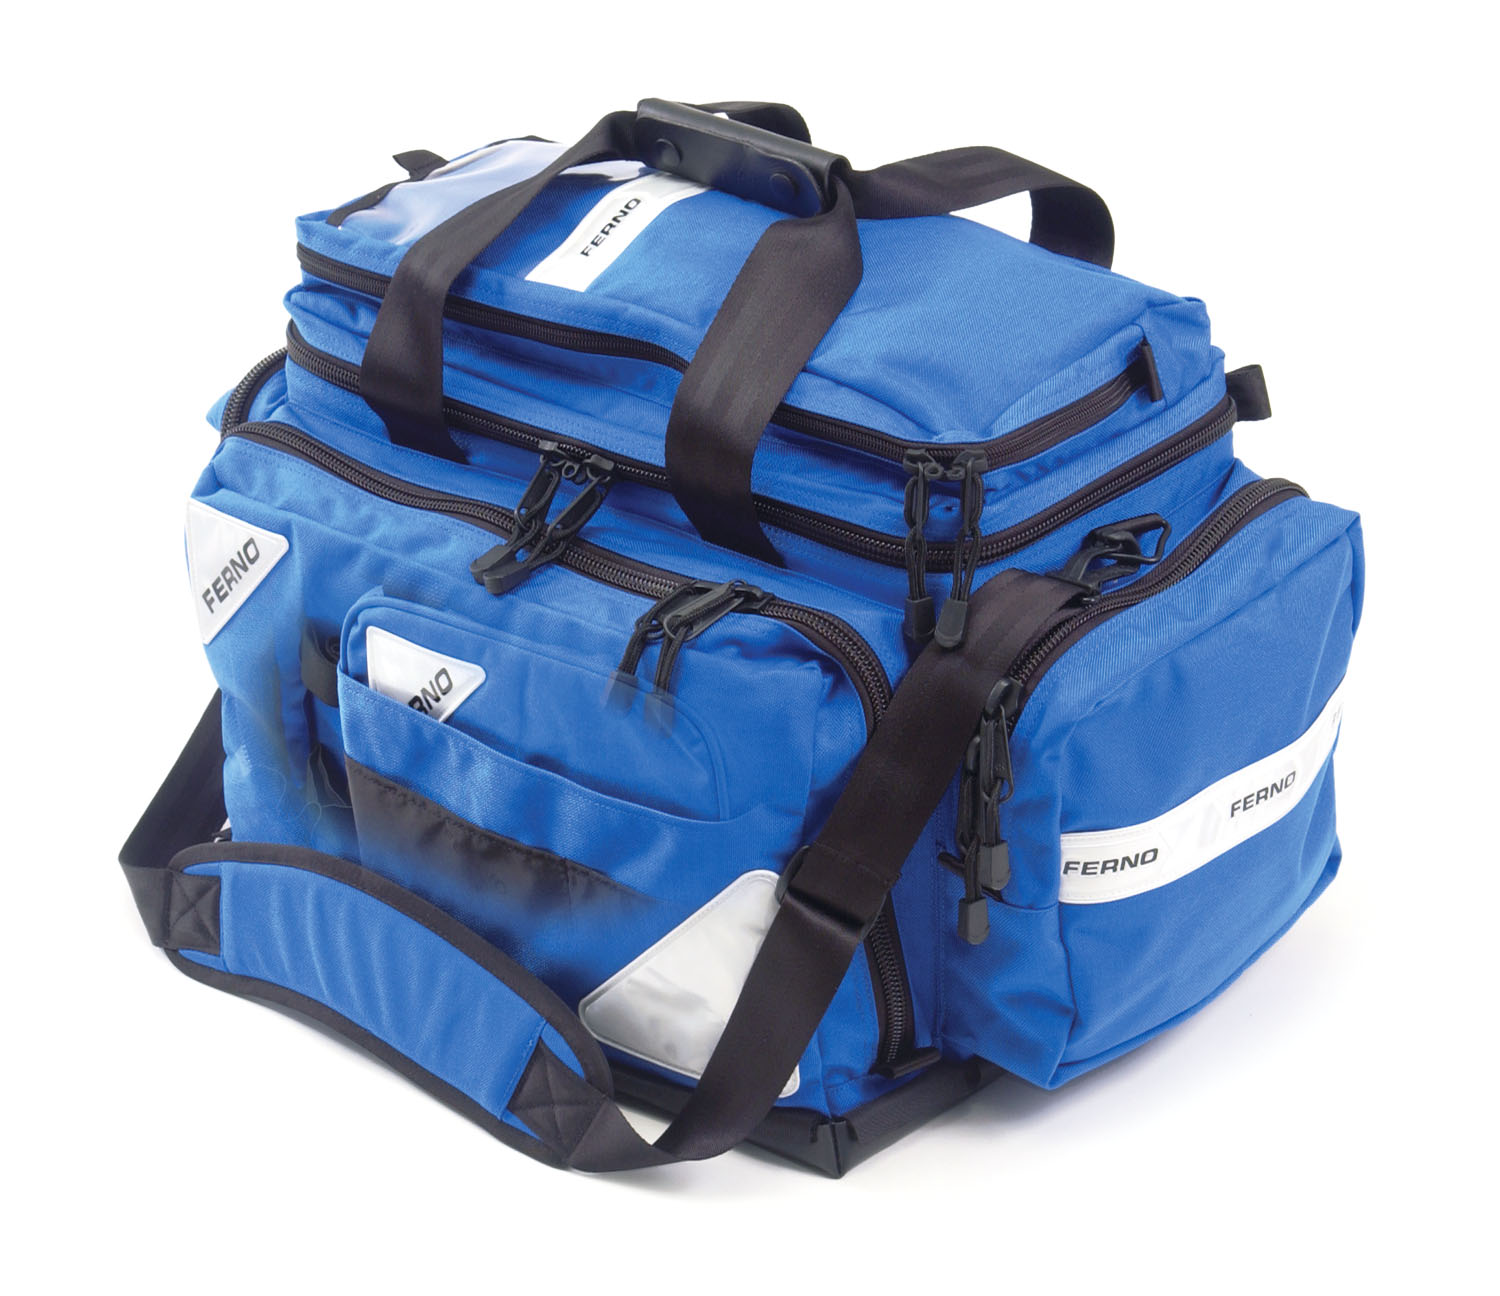 Ferno Model 5108 Professional ALS Trauma Bag